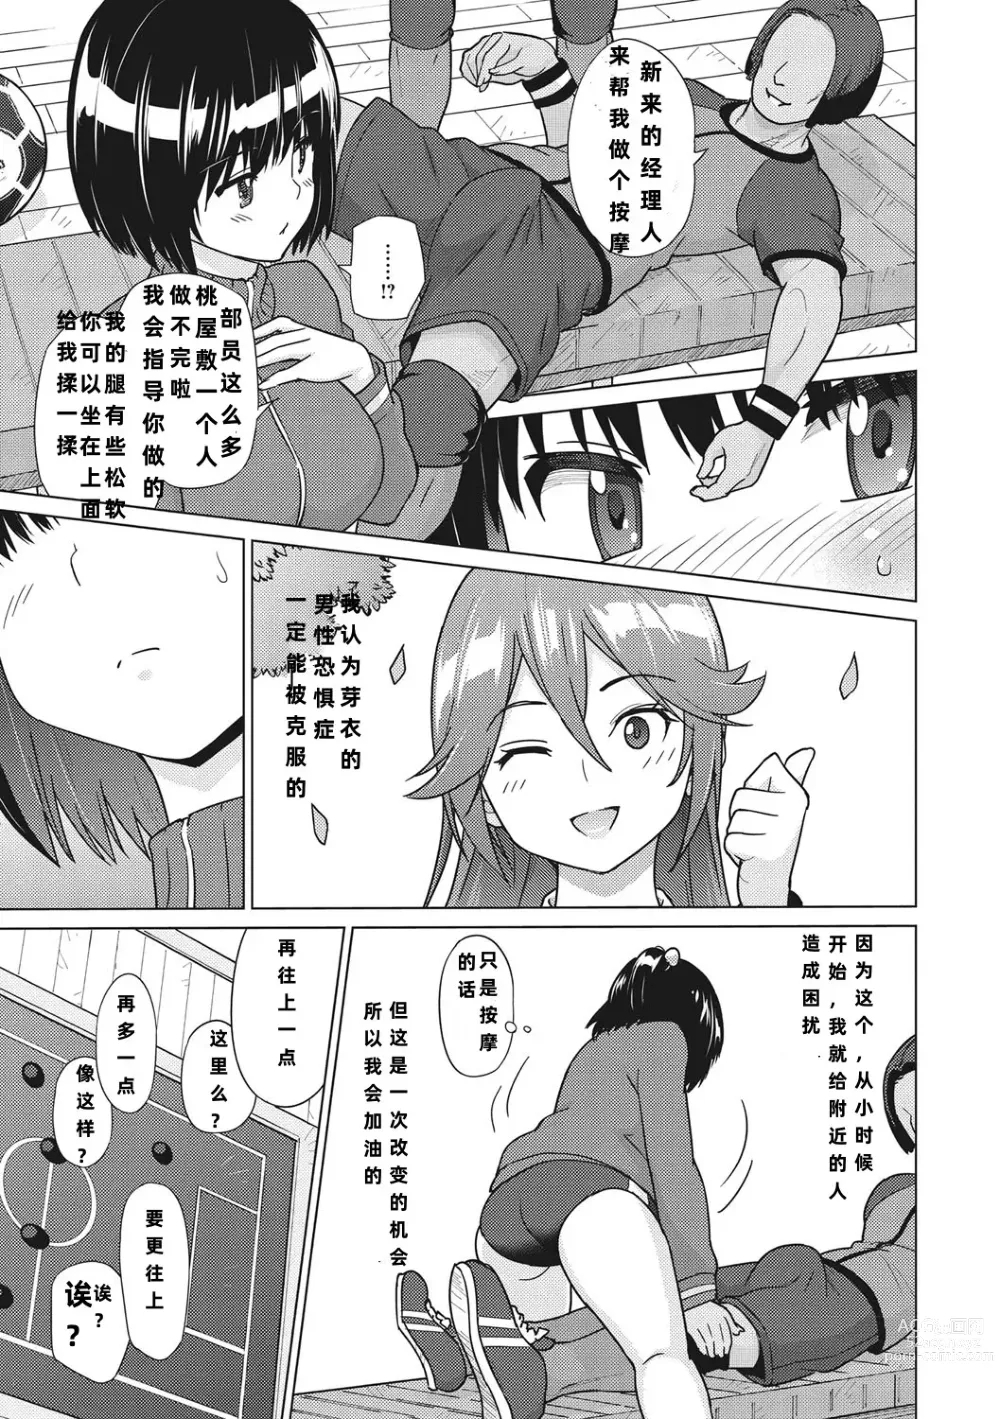 Page 10 of manga SocceMana Overcome